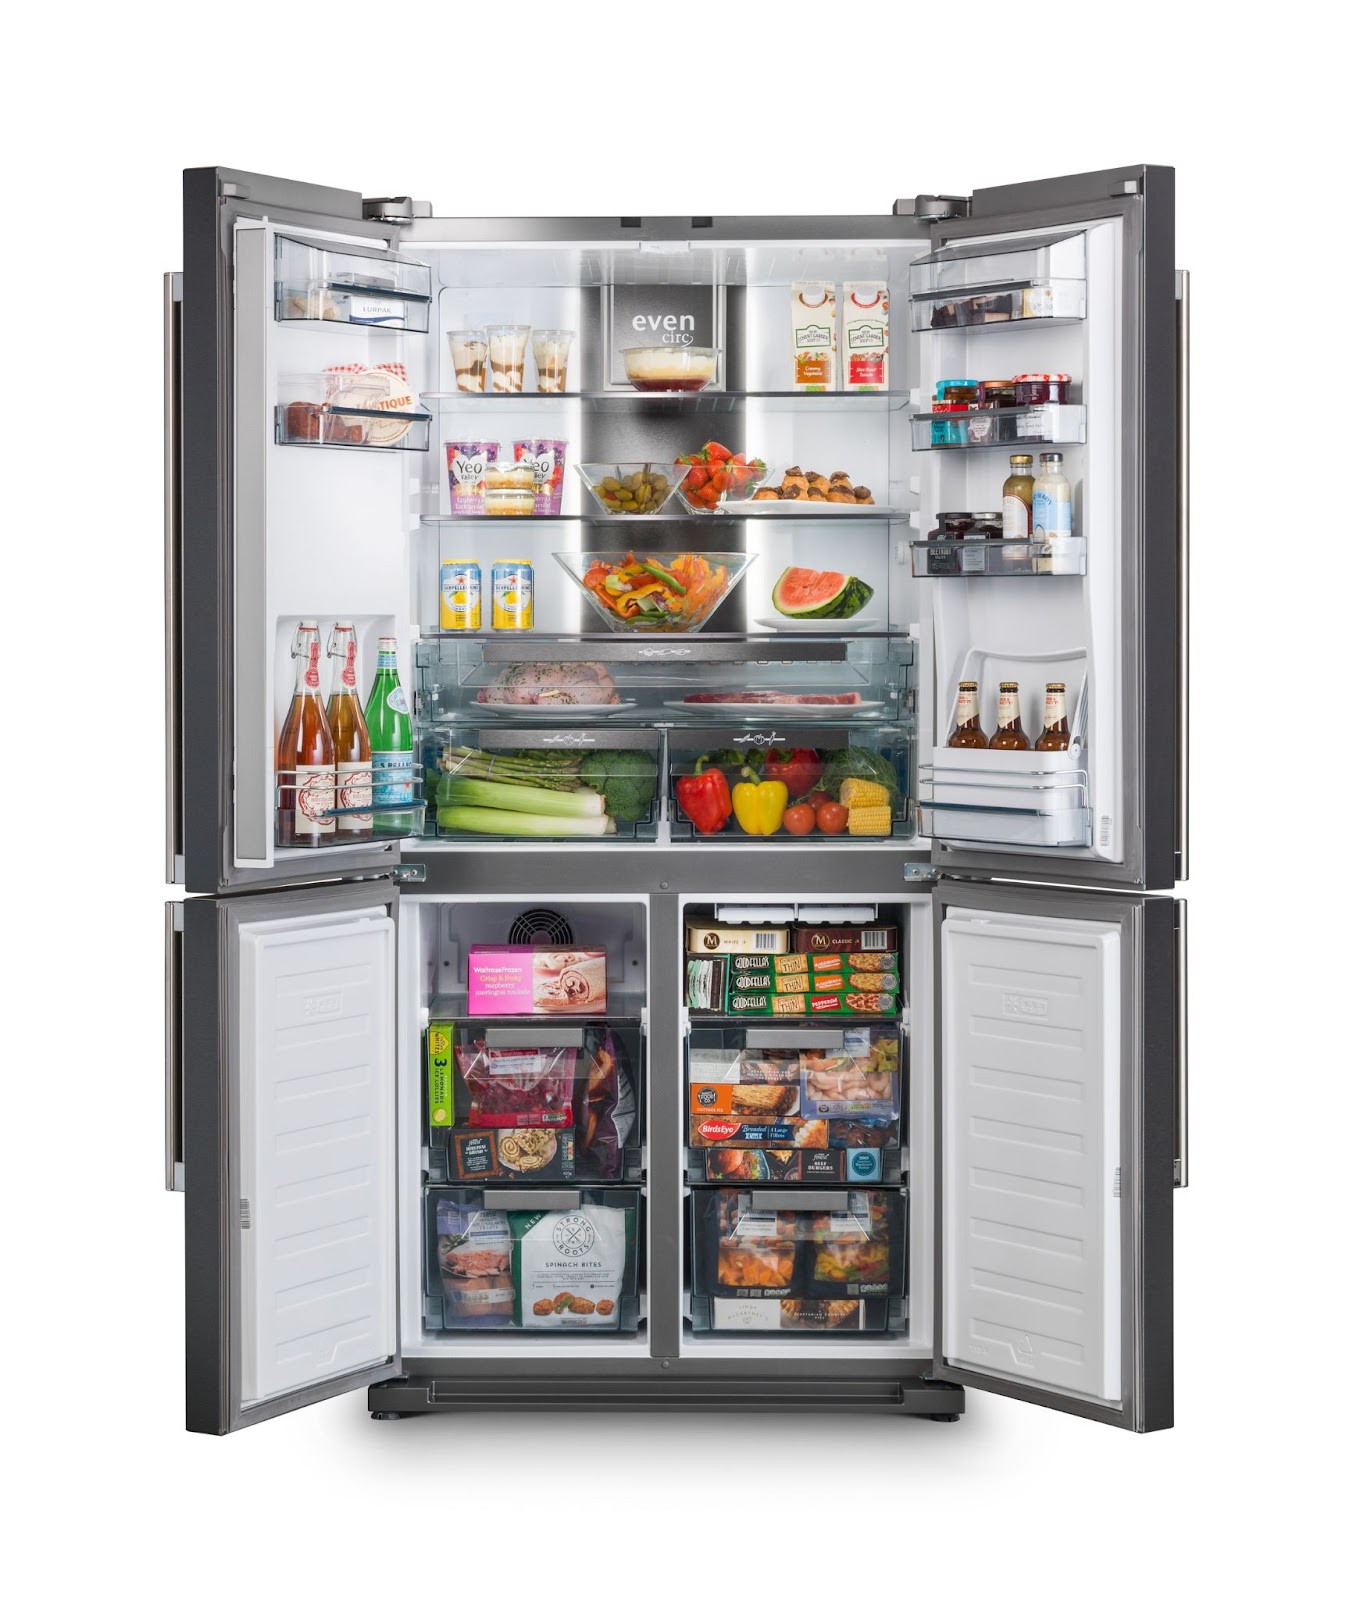 Refrigerator vs. Freezer